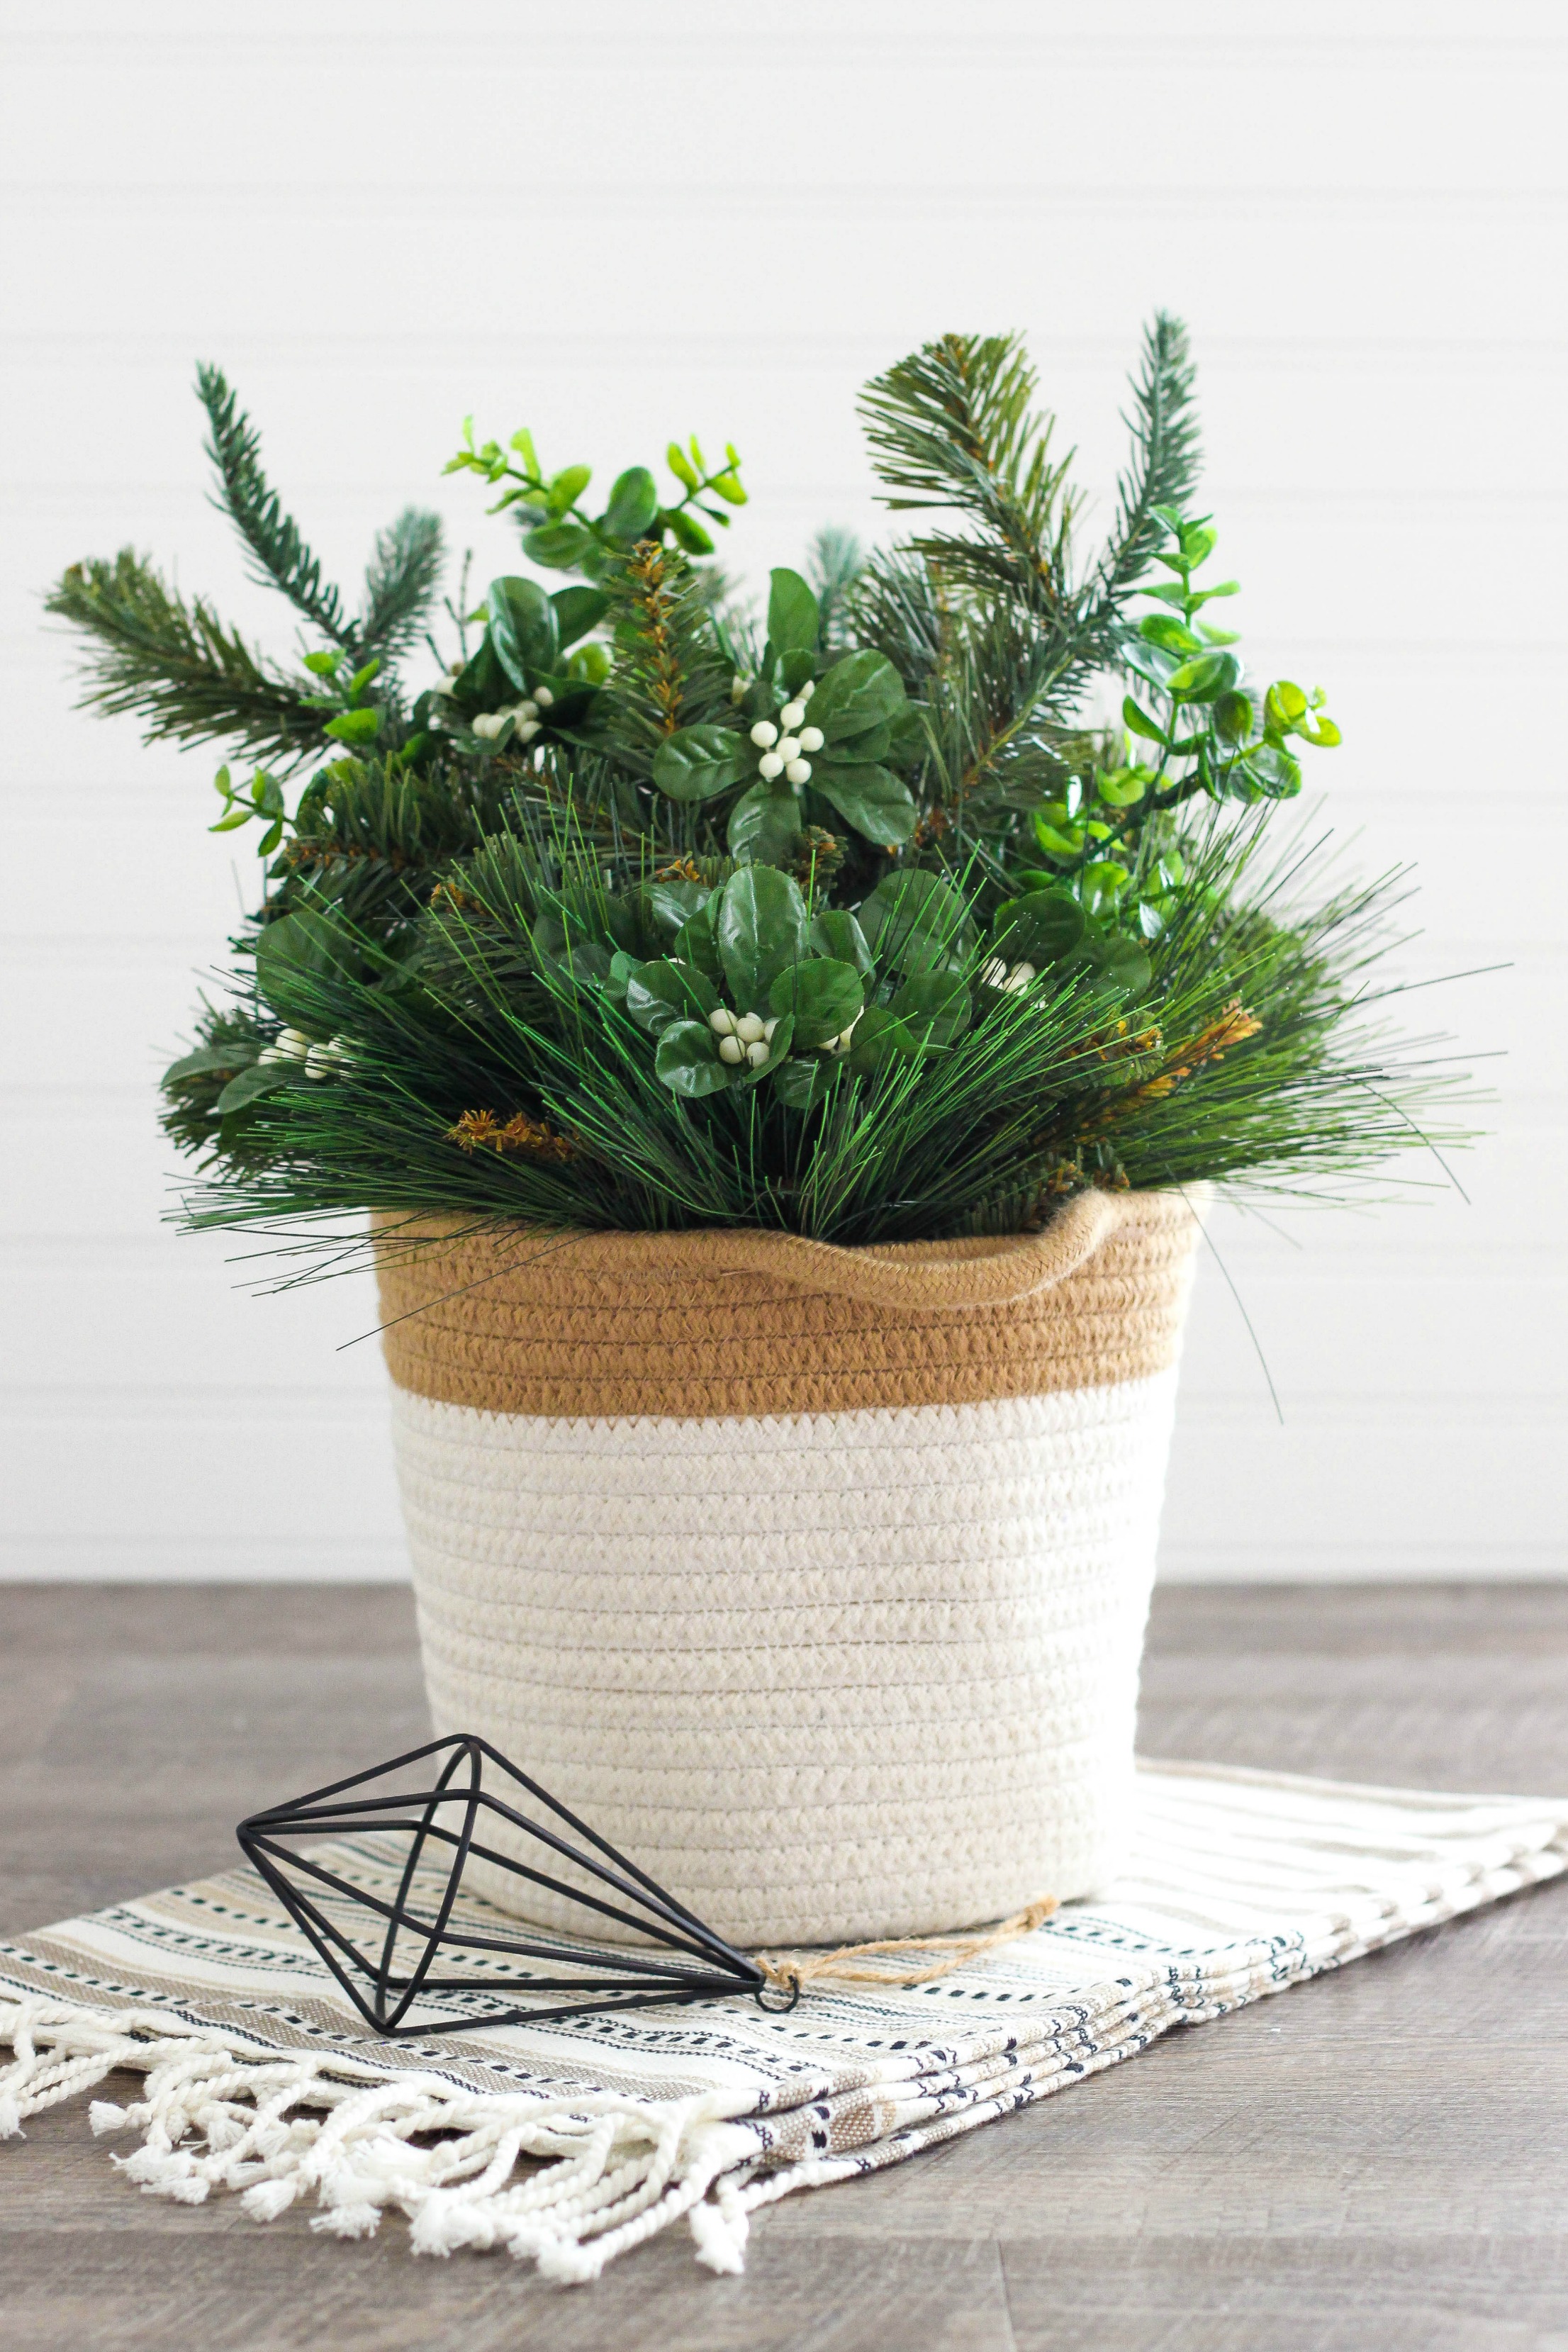 DIY fresh greenery, berries and evergreens arrangement for Christmas